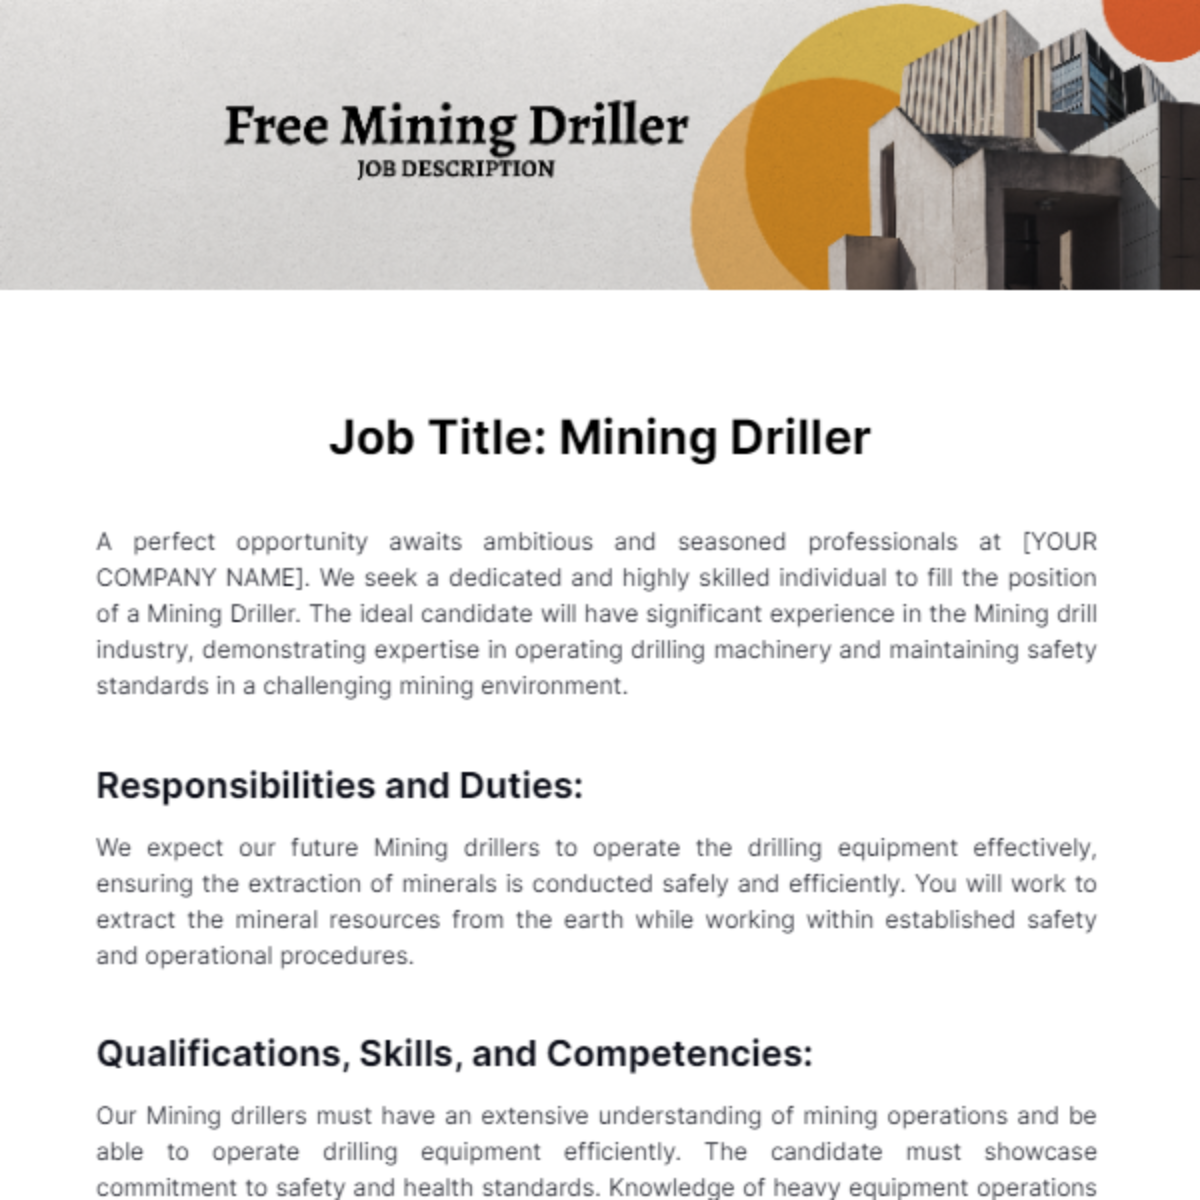 Free Mining Driller Job Description Template